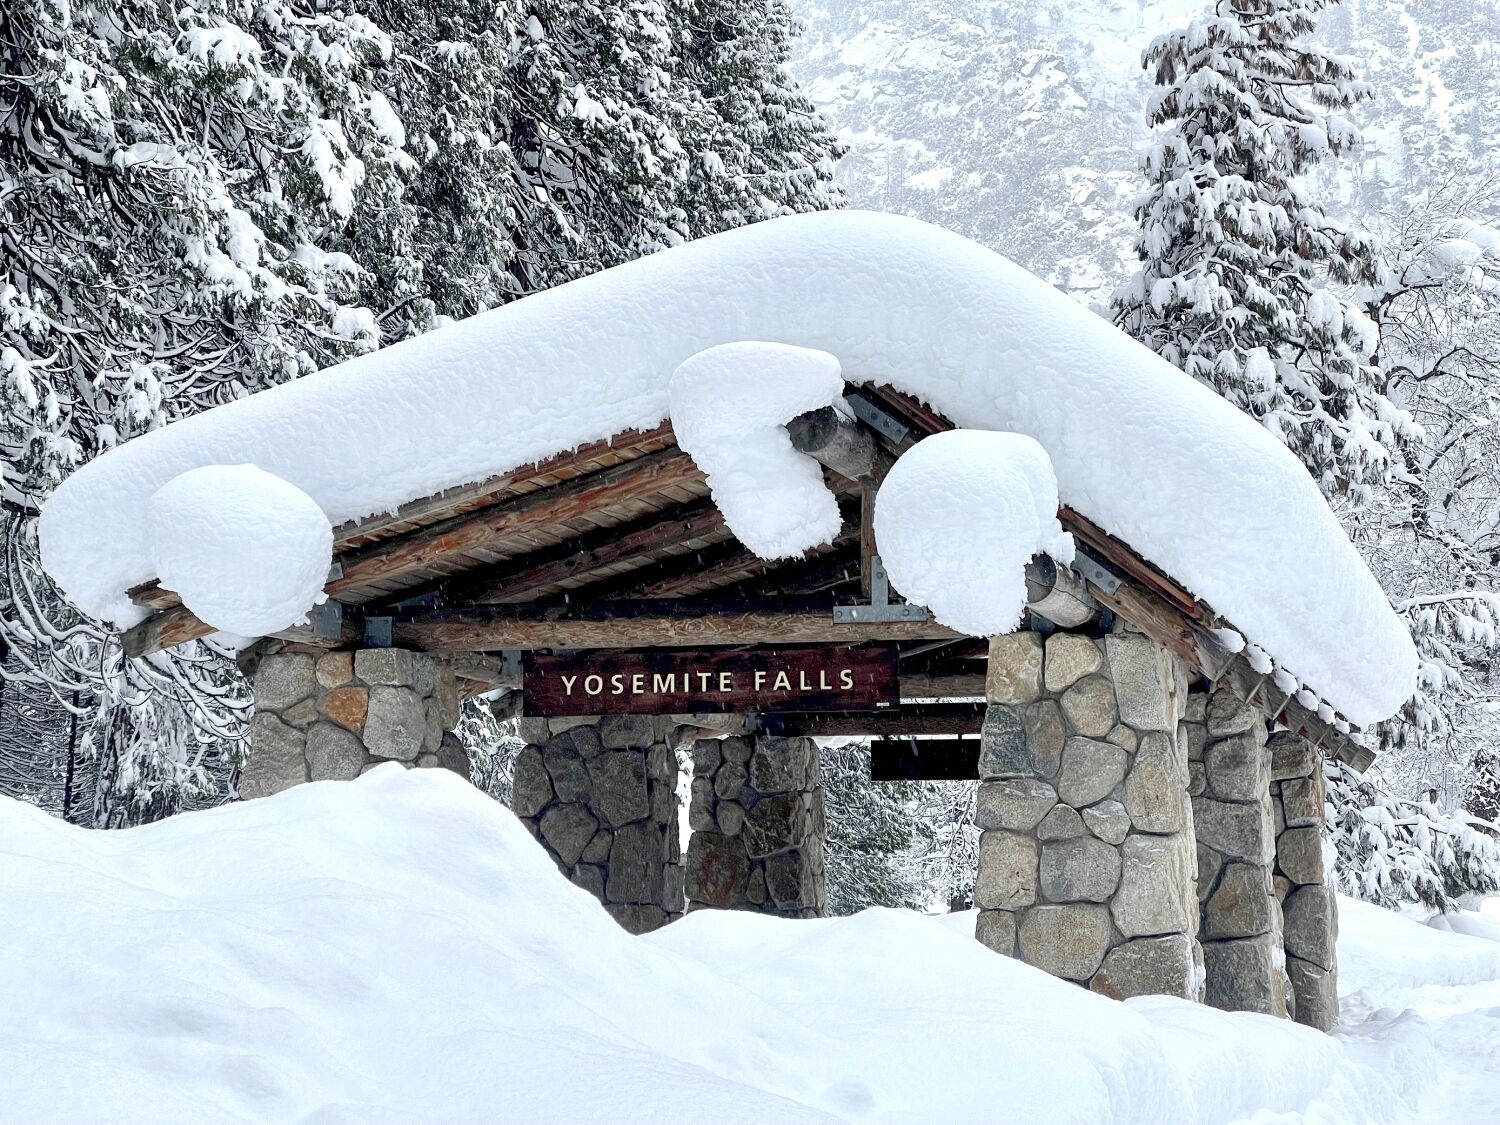 Yosemite breaks decades-old snowfall record, closing national park indefinitely